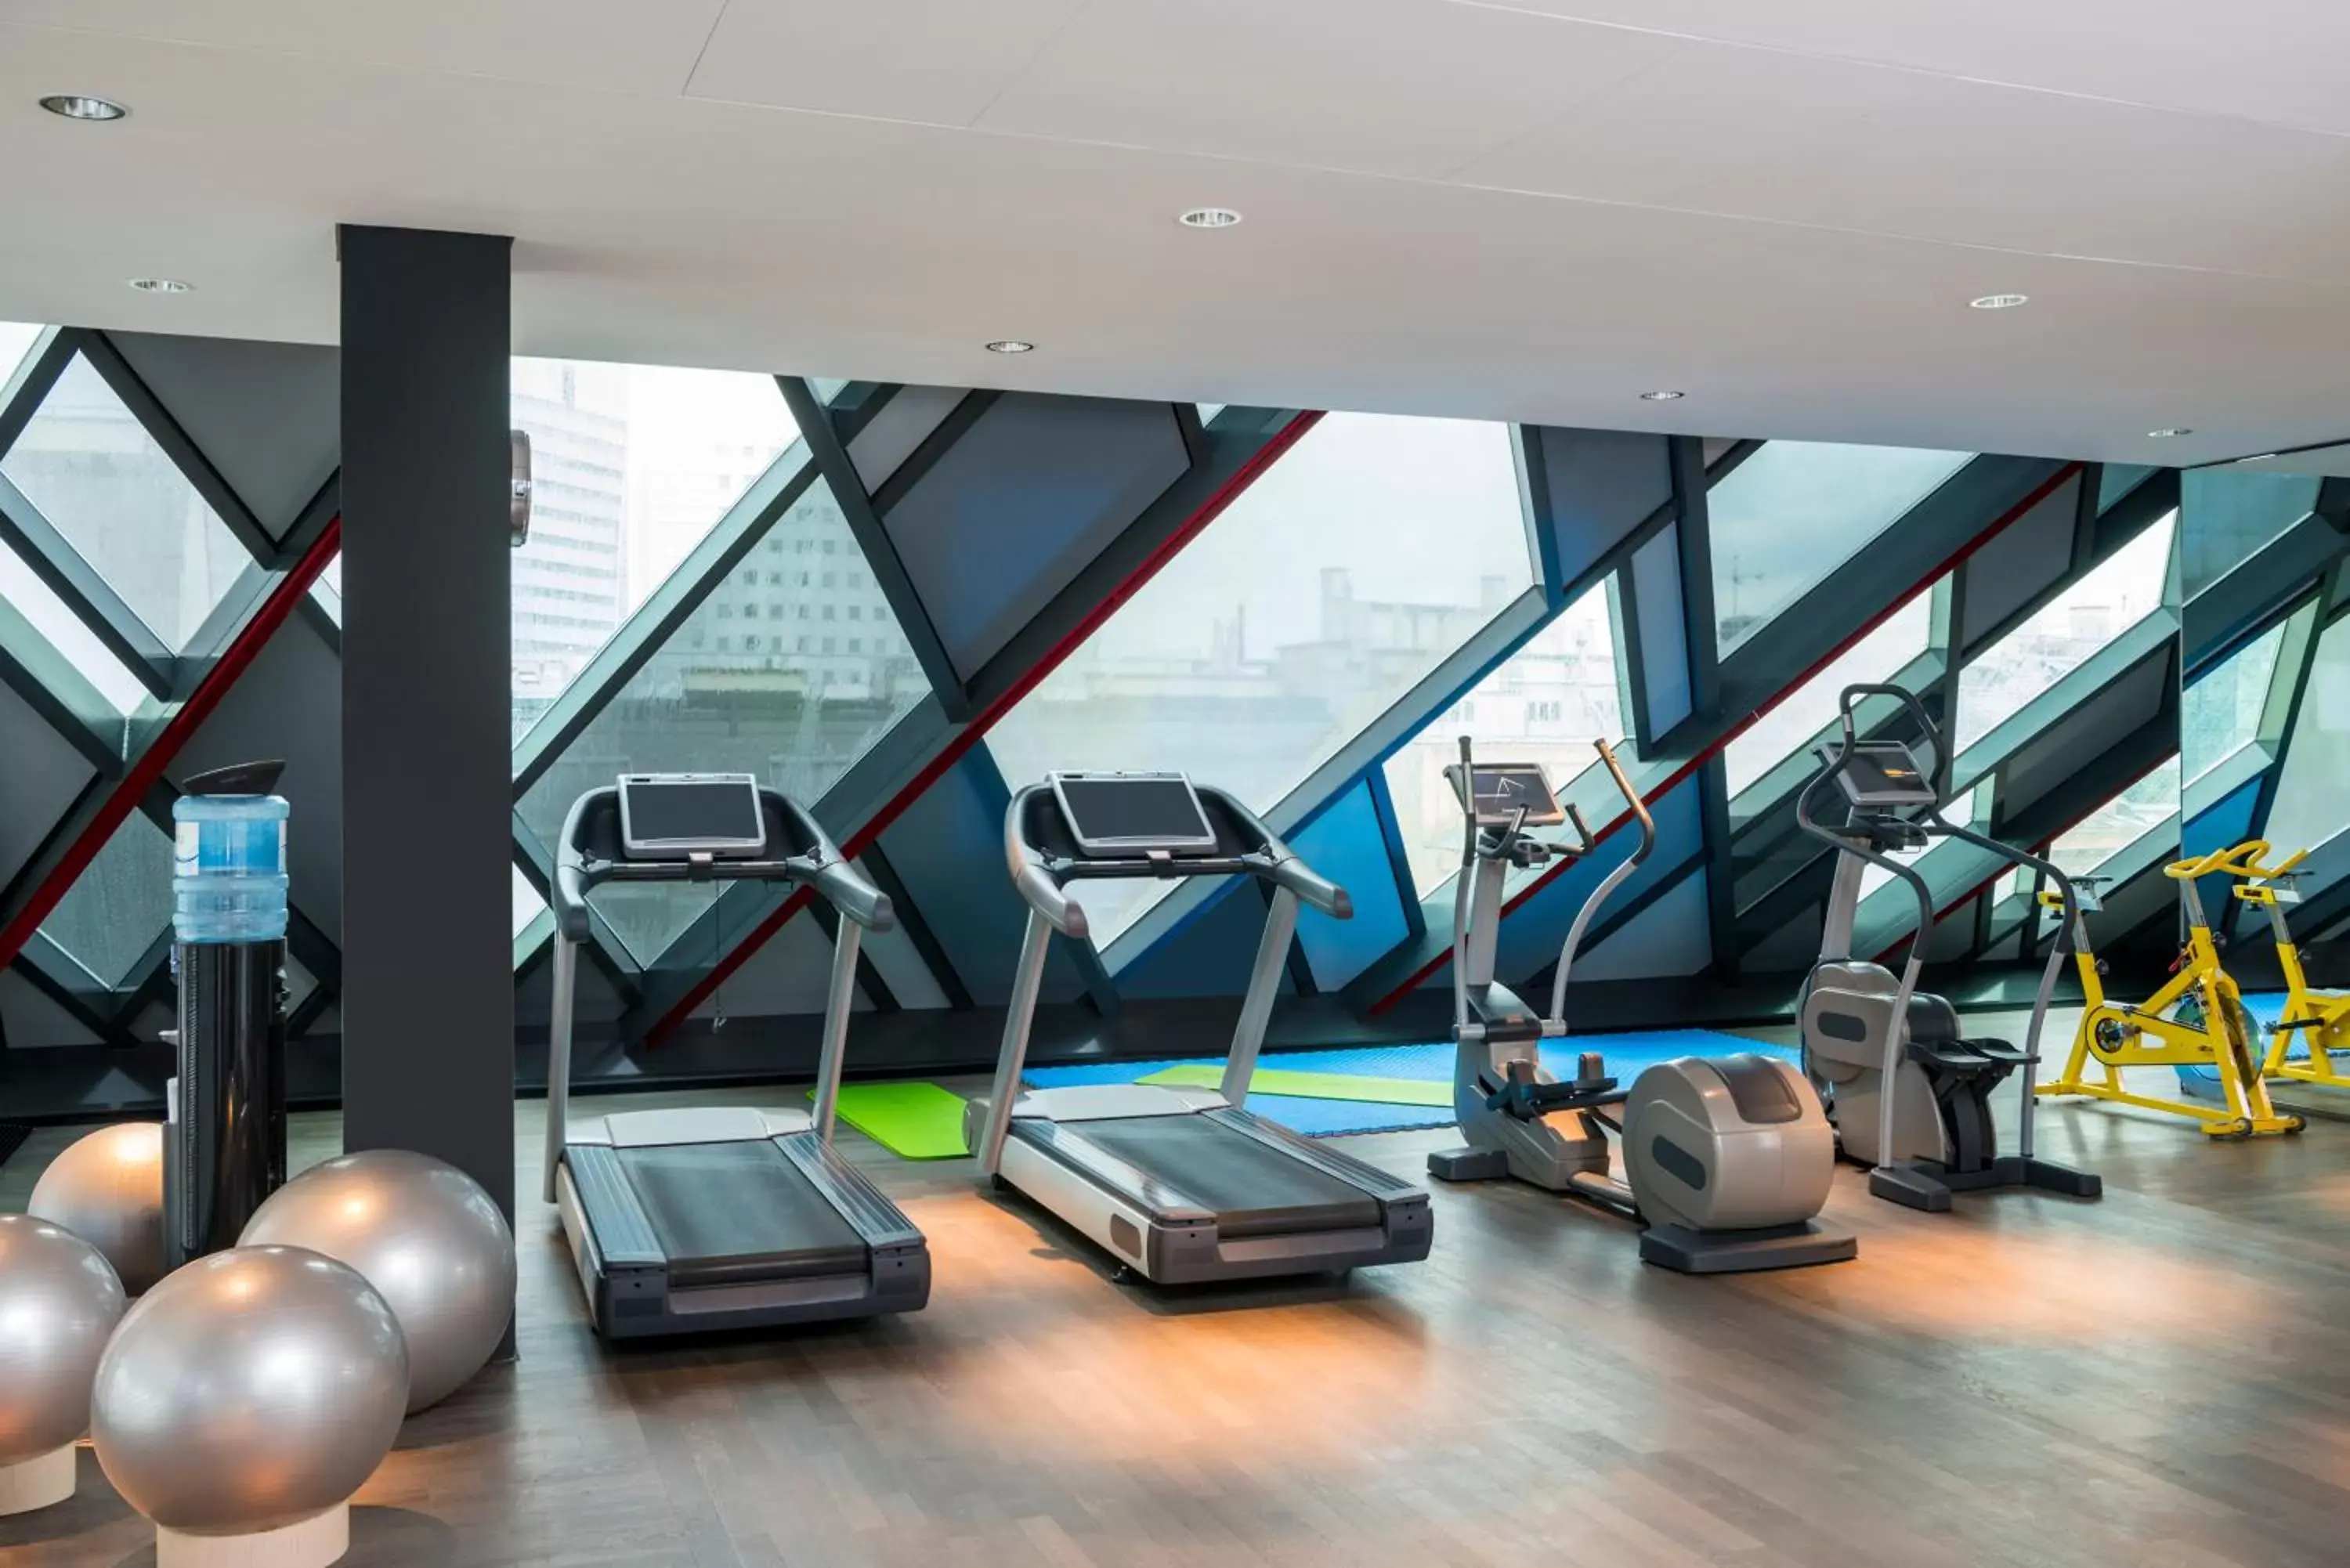 Fitness centre/facilities, Fitness Center/Facilities in SO/ Vienna